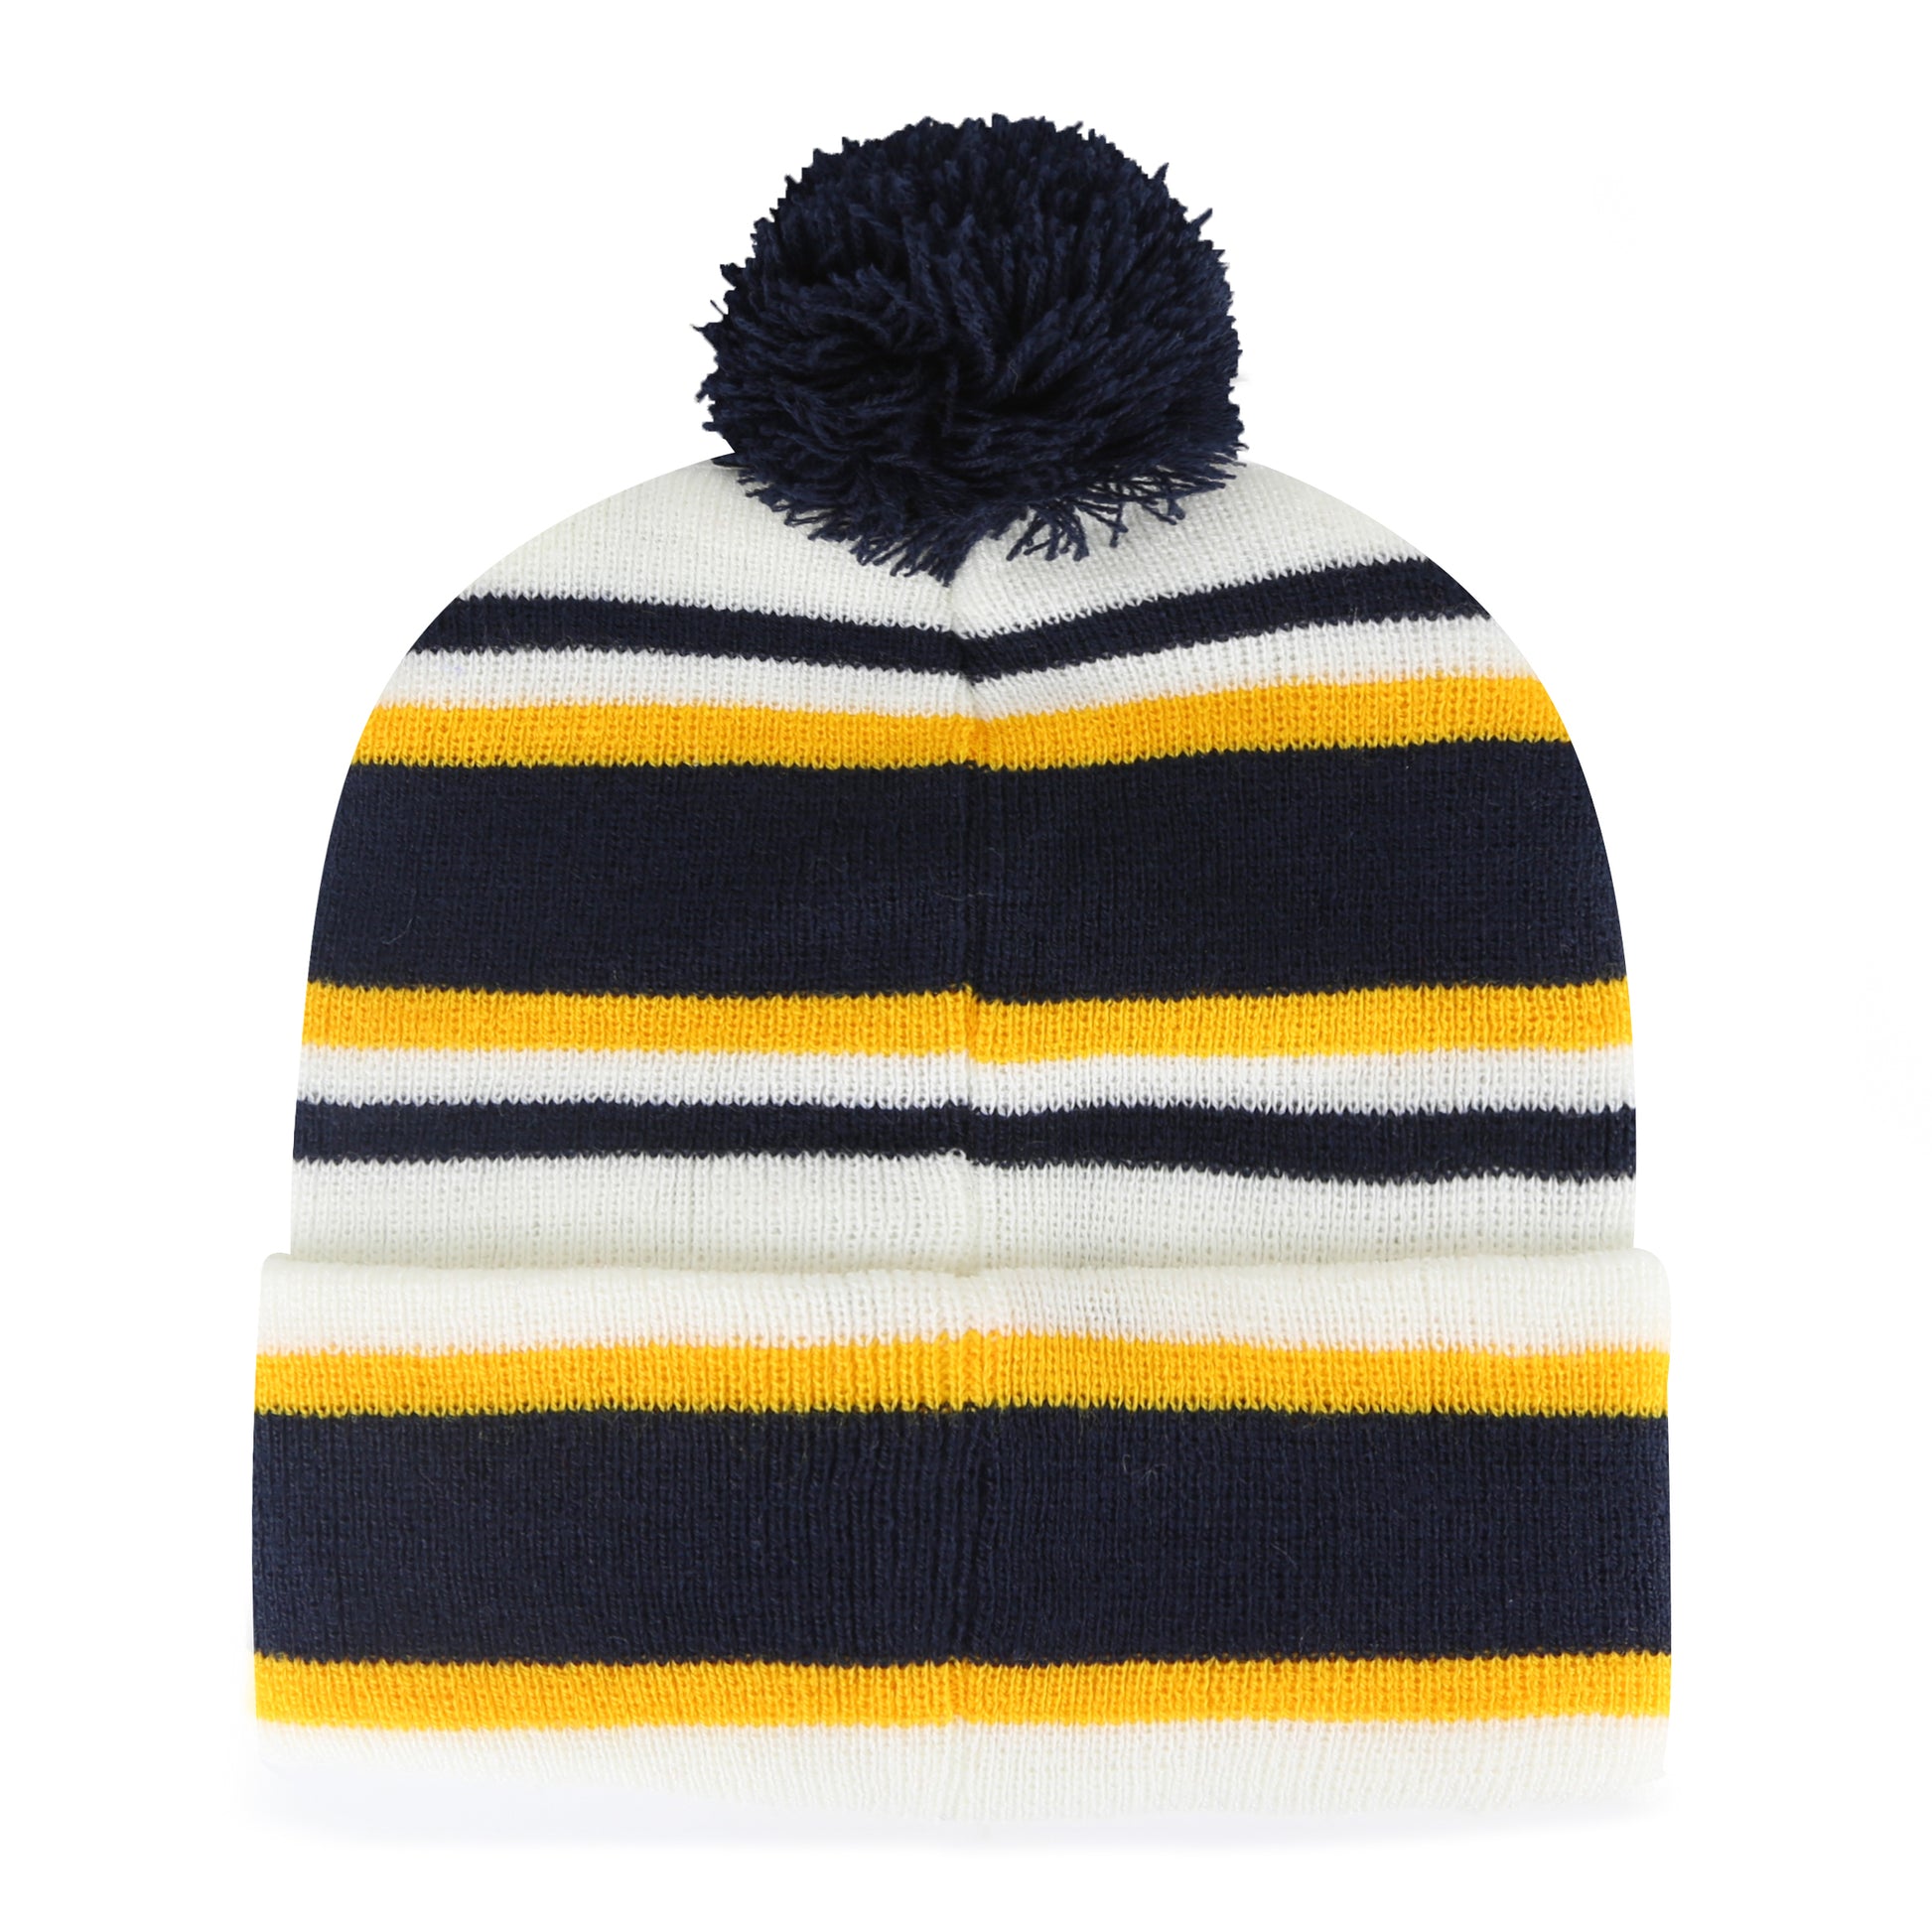 U.C. Berkeley Cal Bears team color wide stripe Pom beanie hat -Natural-Shop College Wear